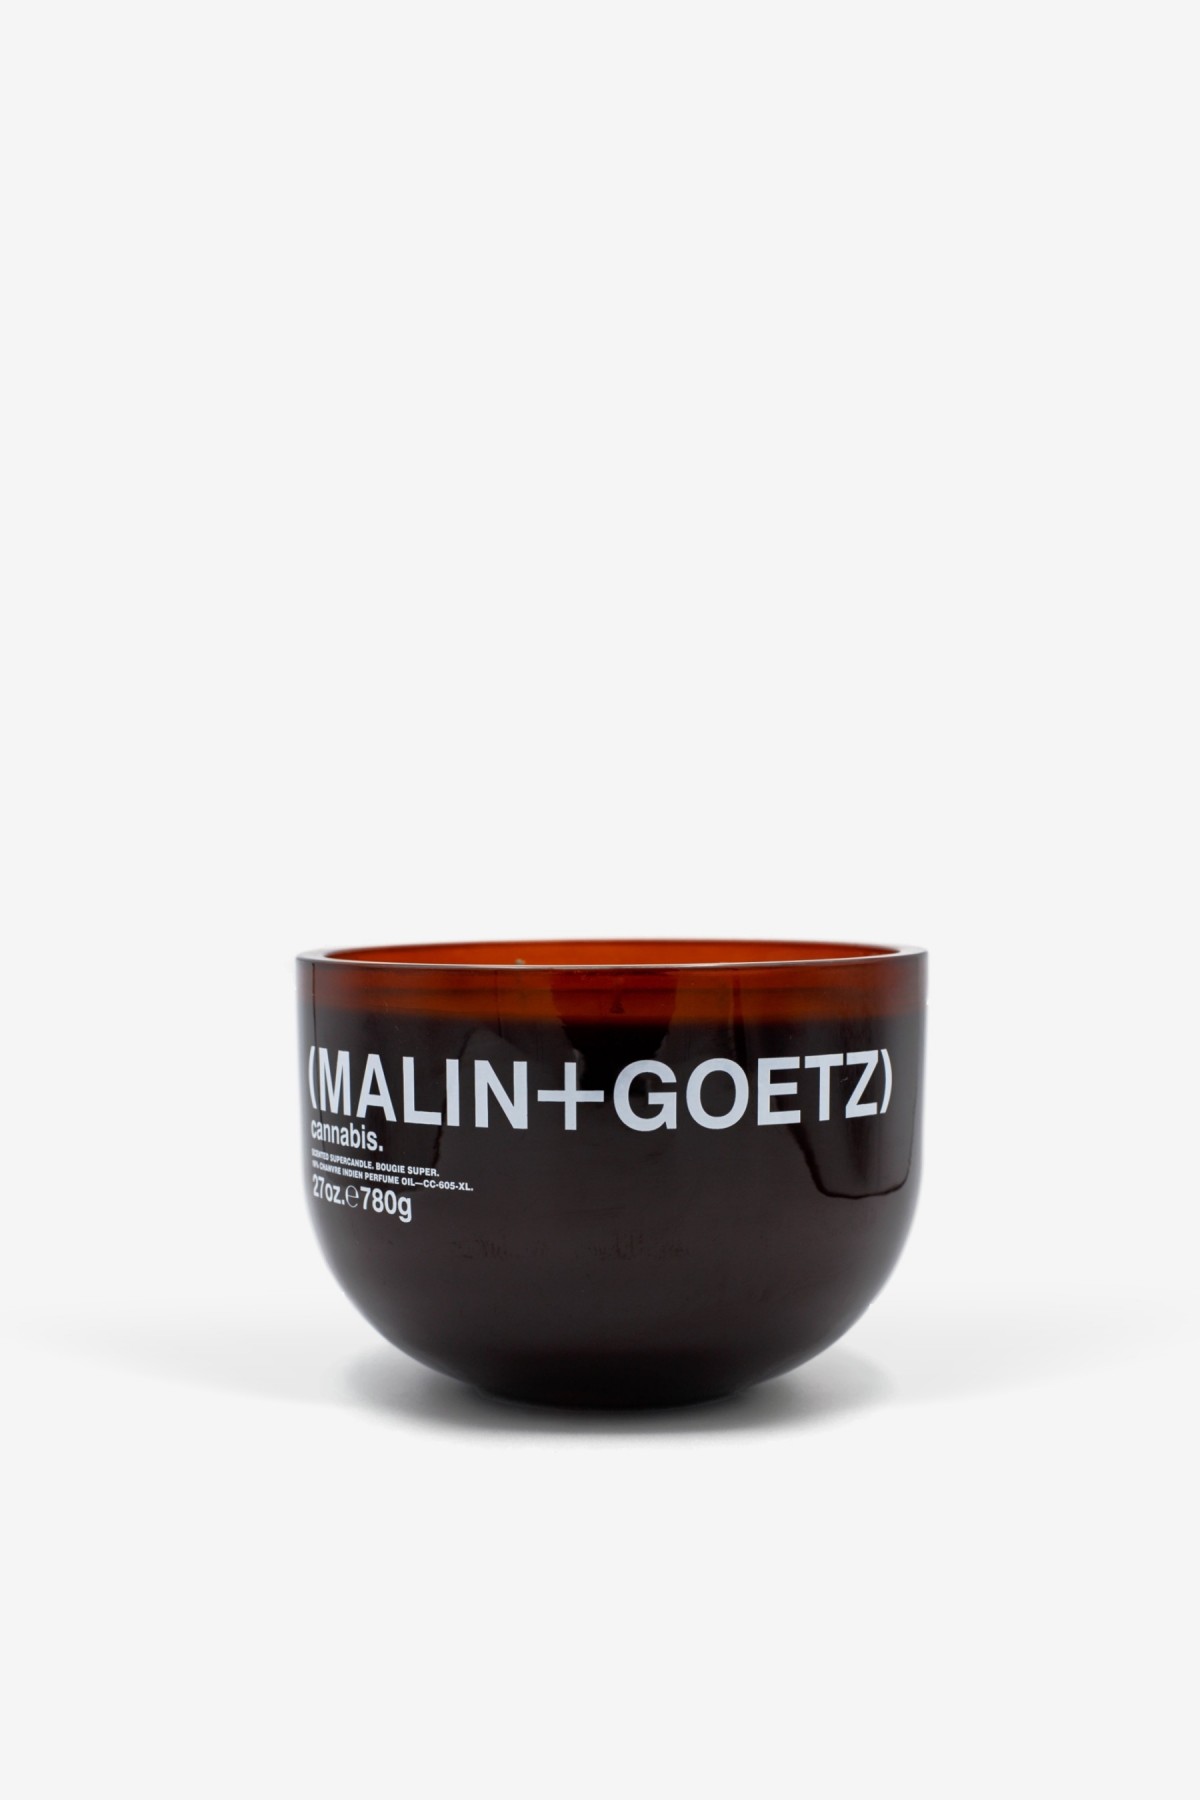 Malin+Goetz Cannabis Super Candle 780g in 